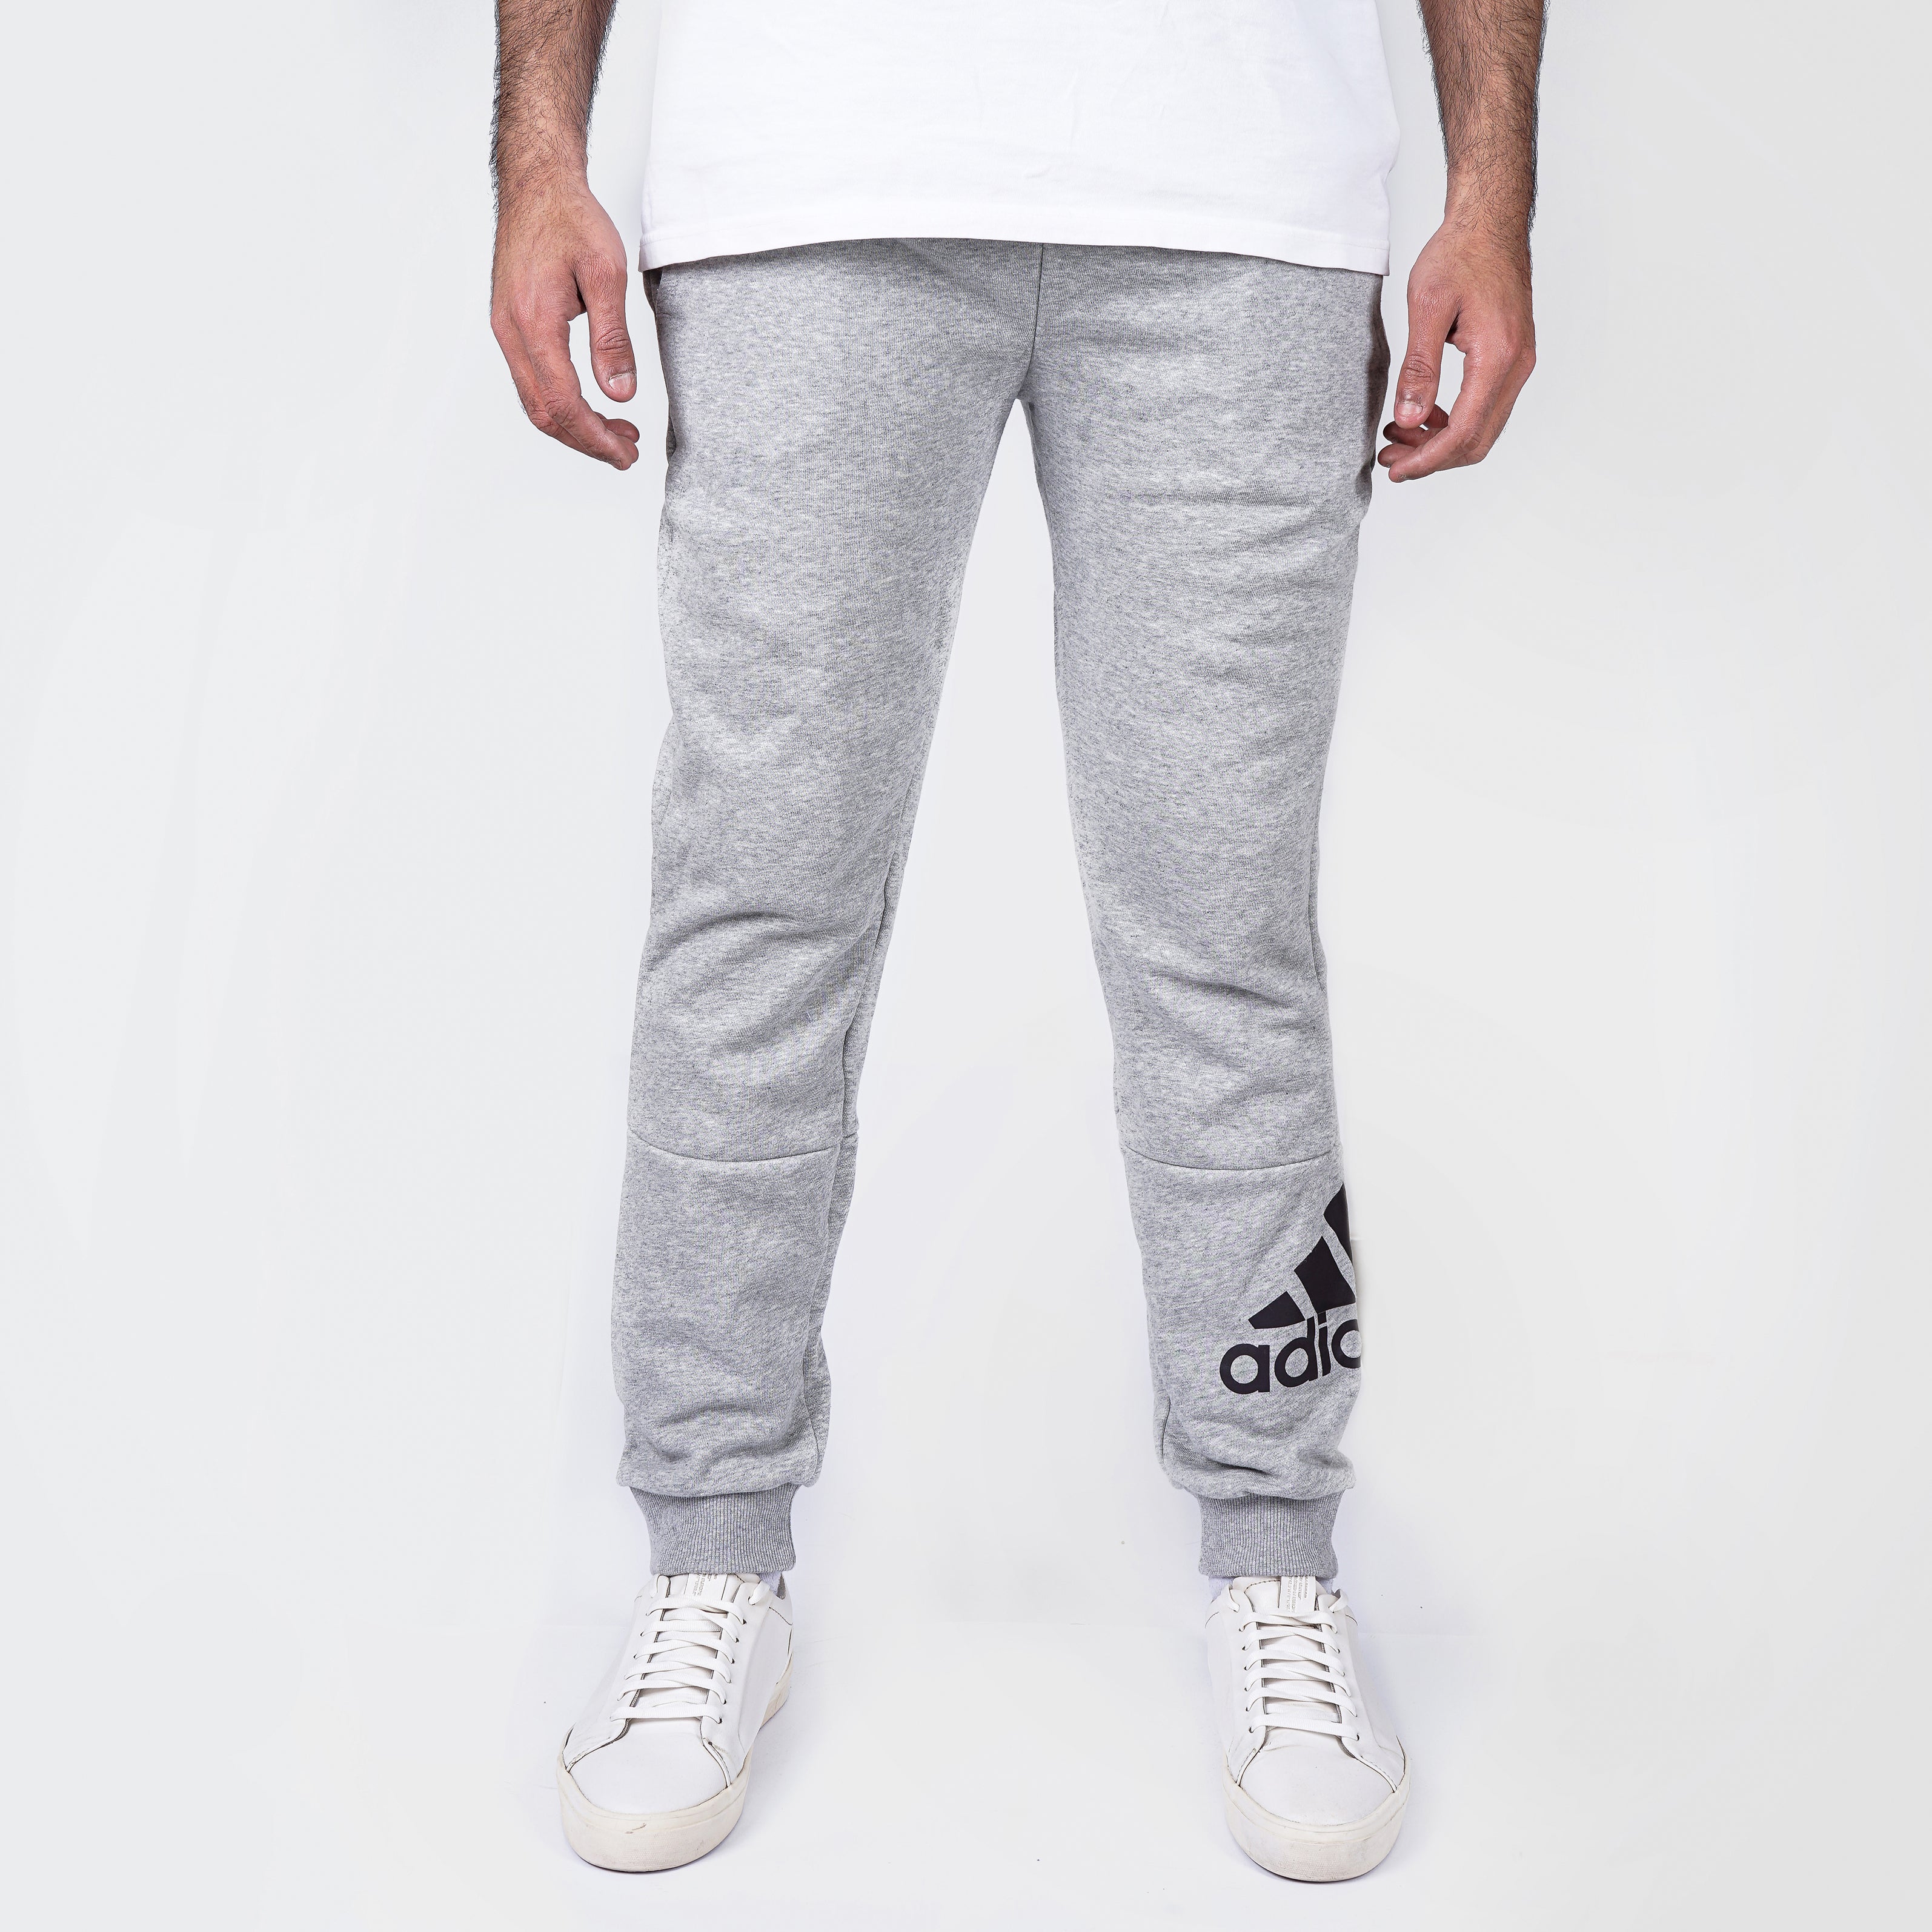 Adidas Printed Light Grey Sweatpants - Marca Deals - Adidas